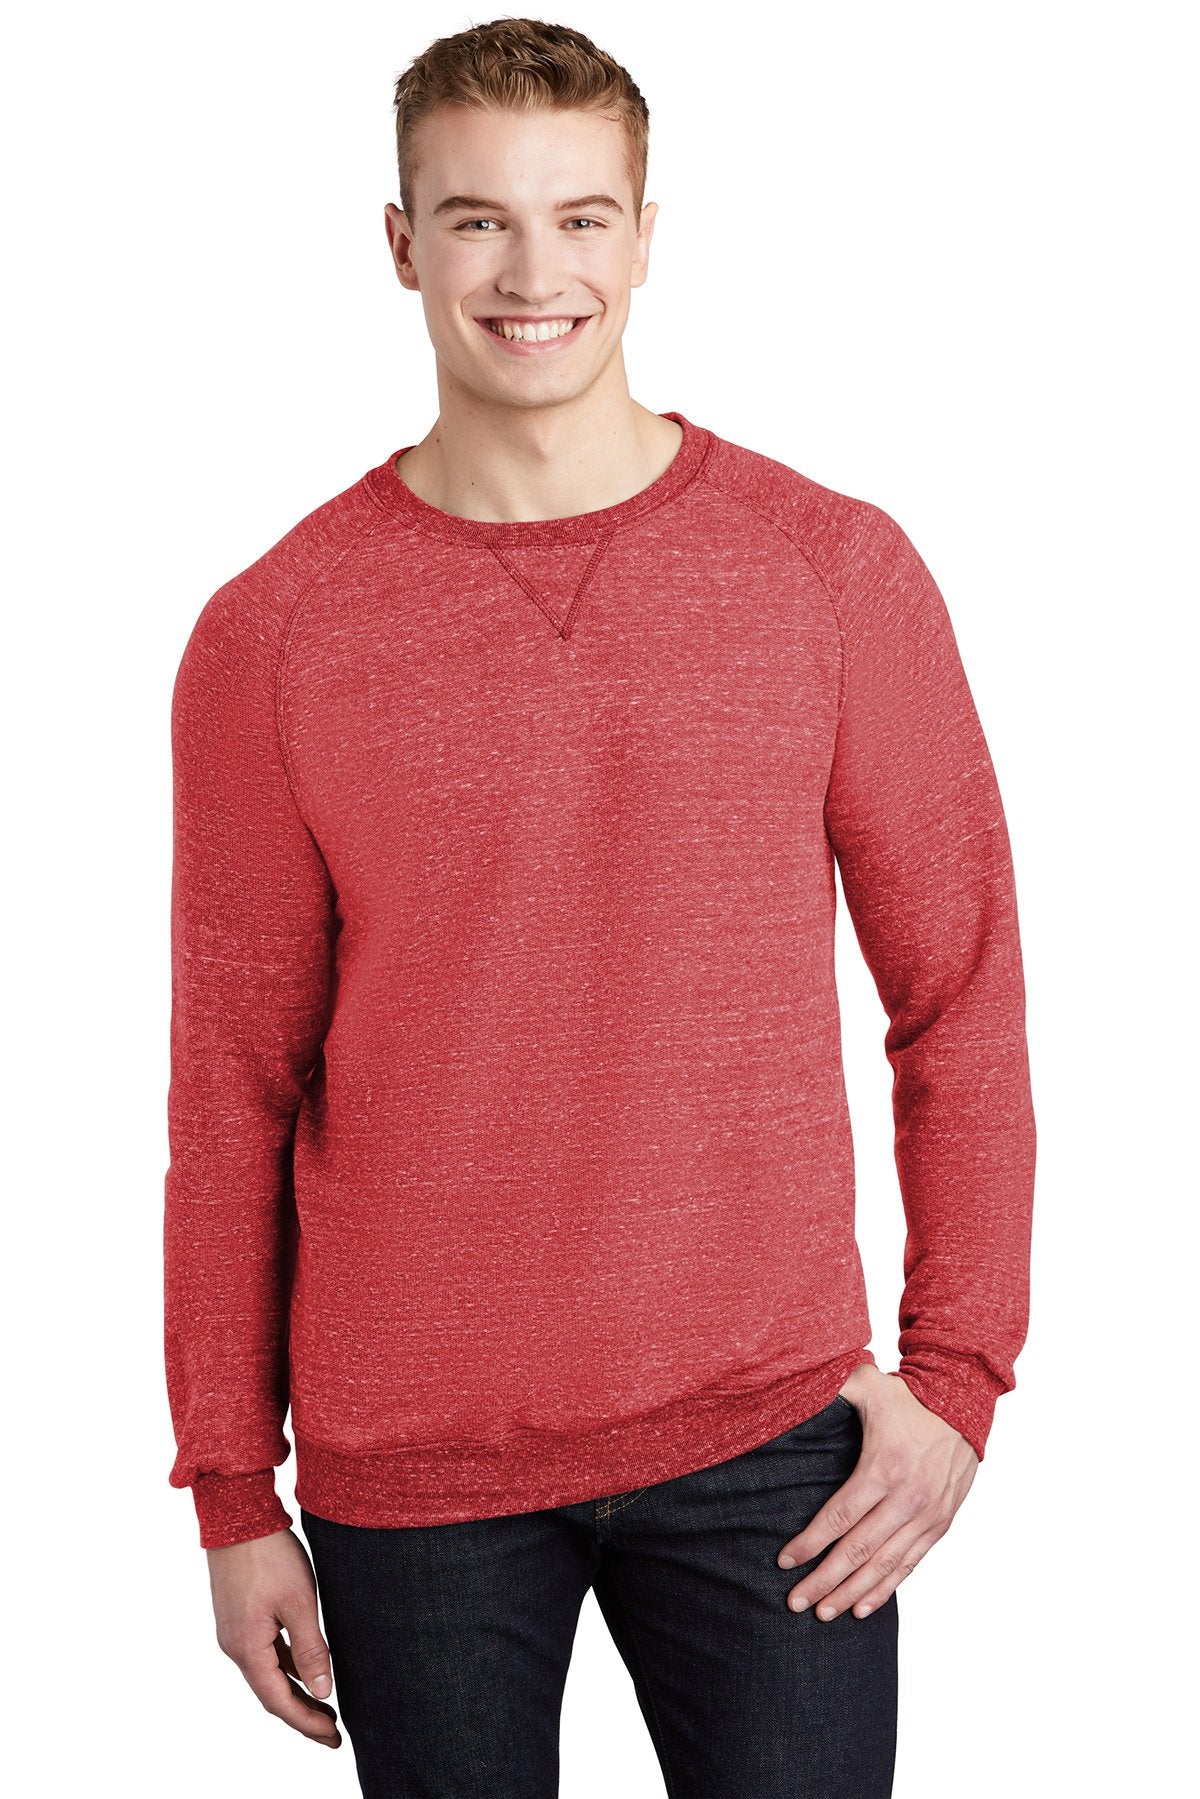 Jerzees Red 91M custom design sweatshirts